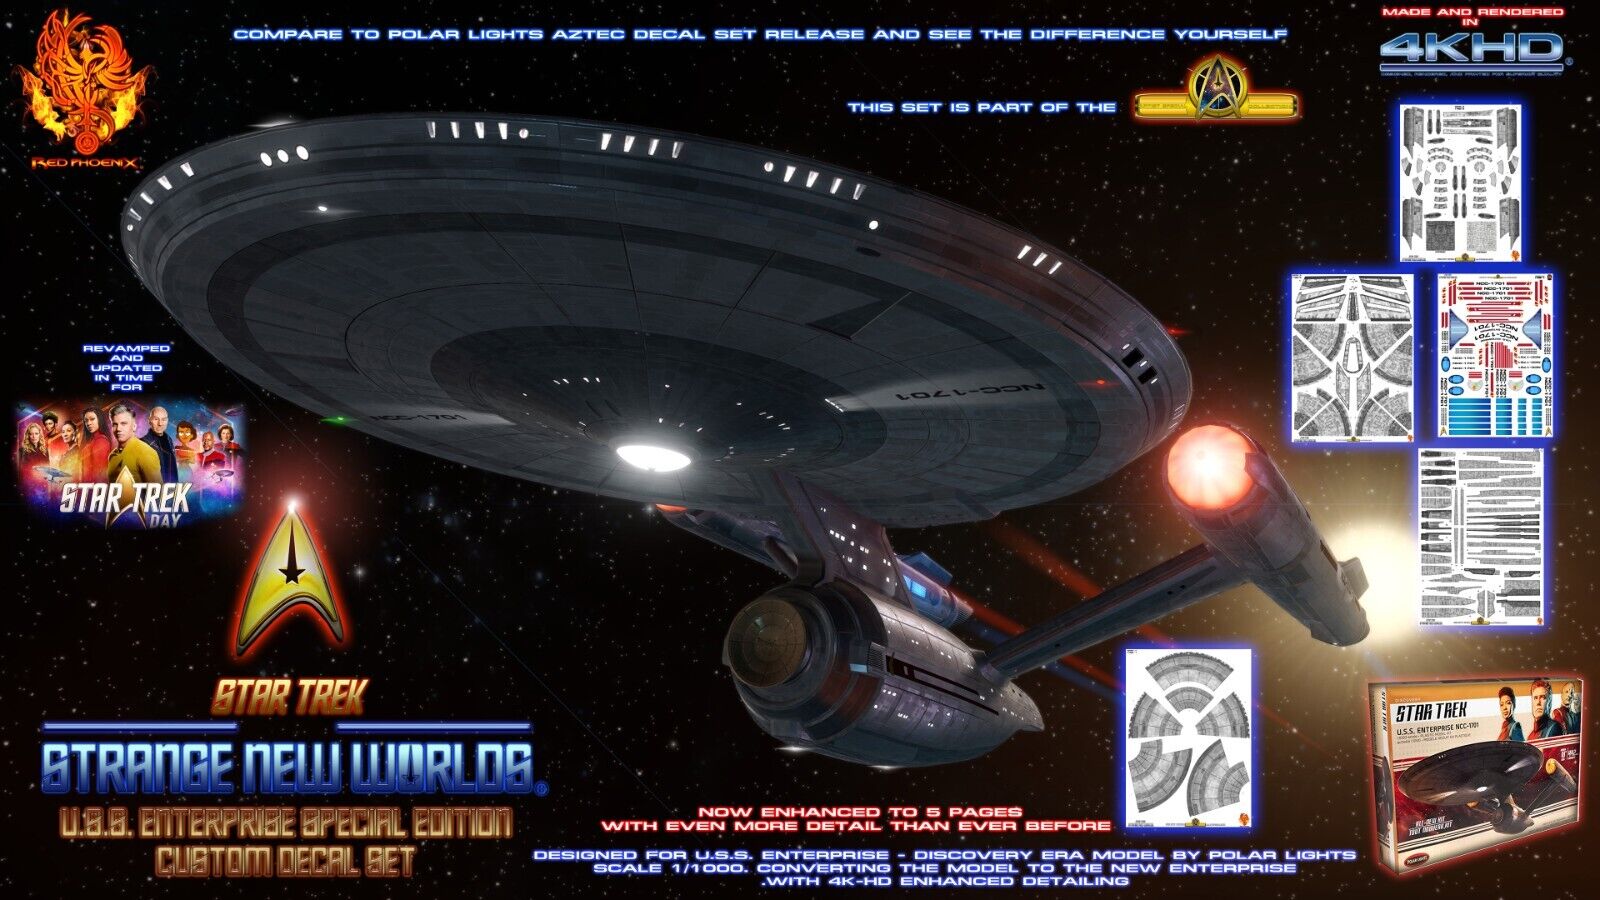 U.S.S. Enterprise: Strange New Worlds 1/1000 Scale Enhanced Edition SPECIALTY 